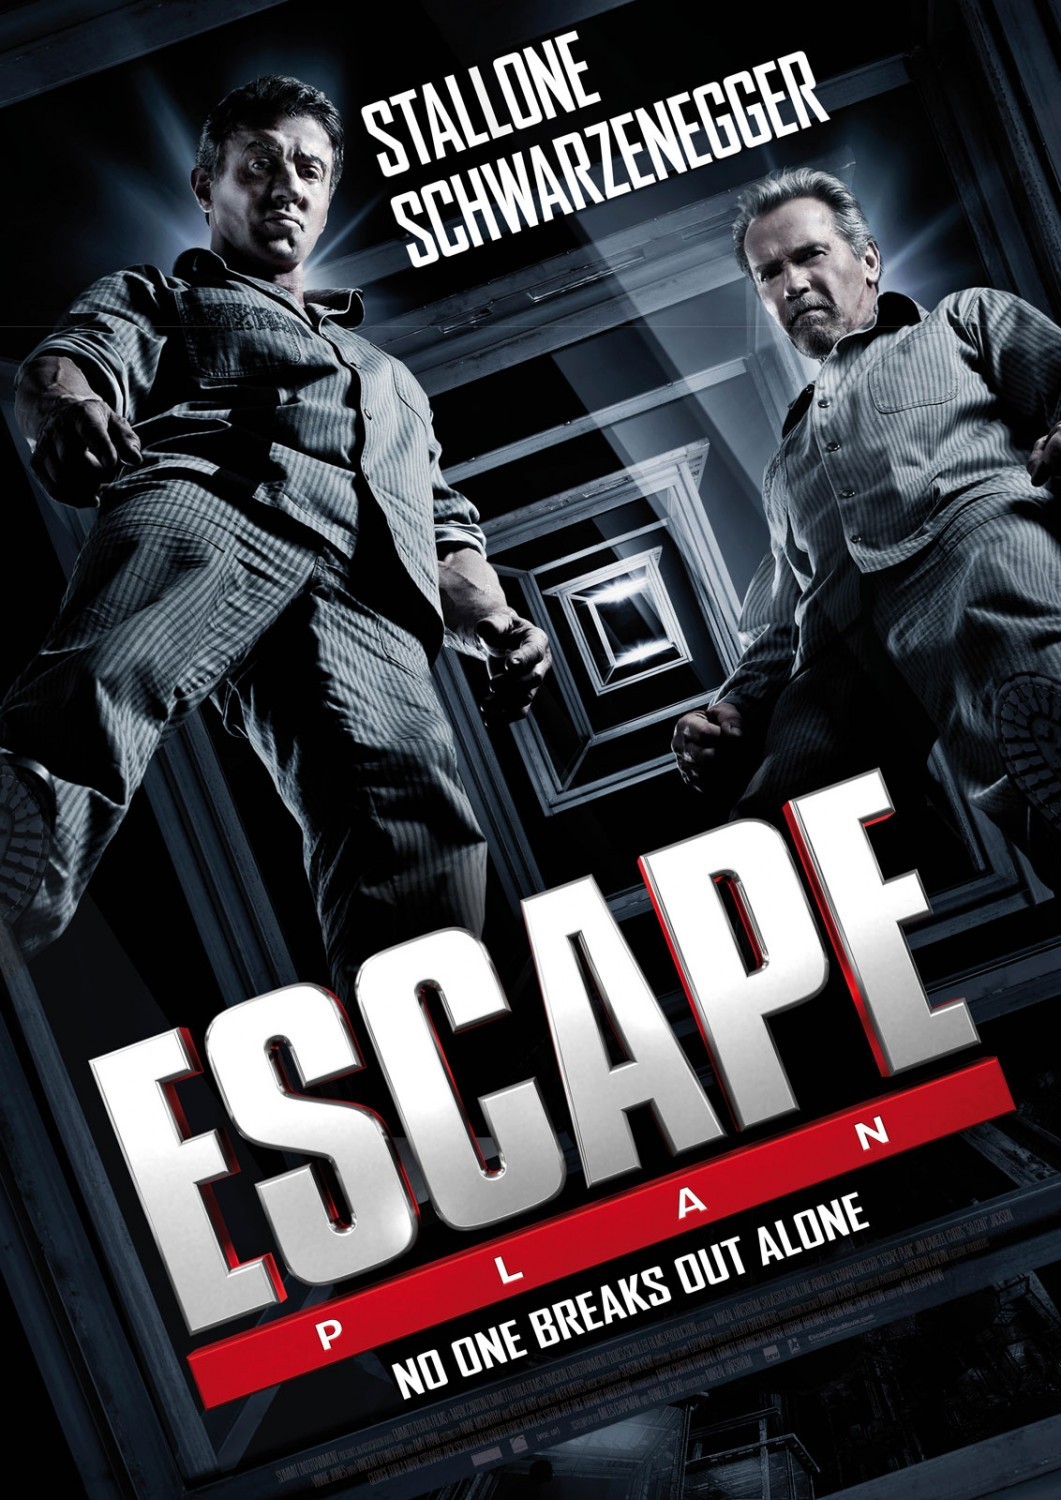 Poster of Summit Entertainment's Escape Plan (2013)